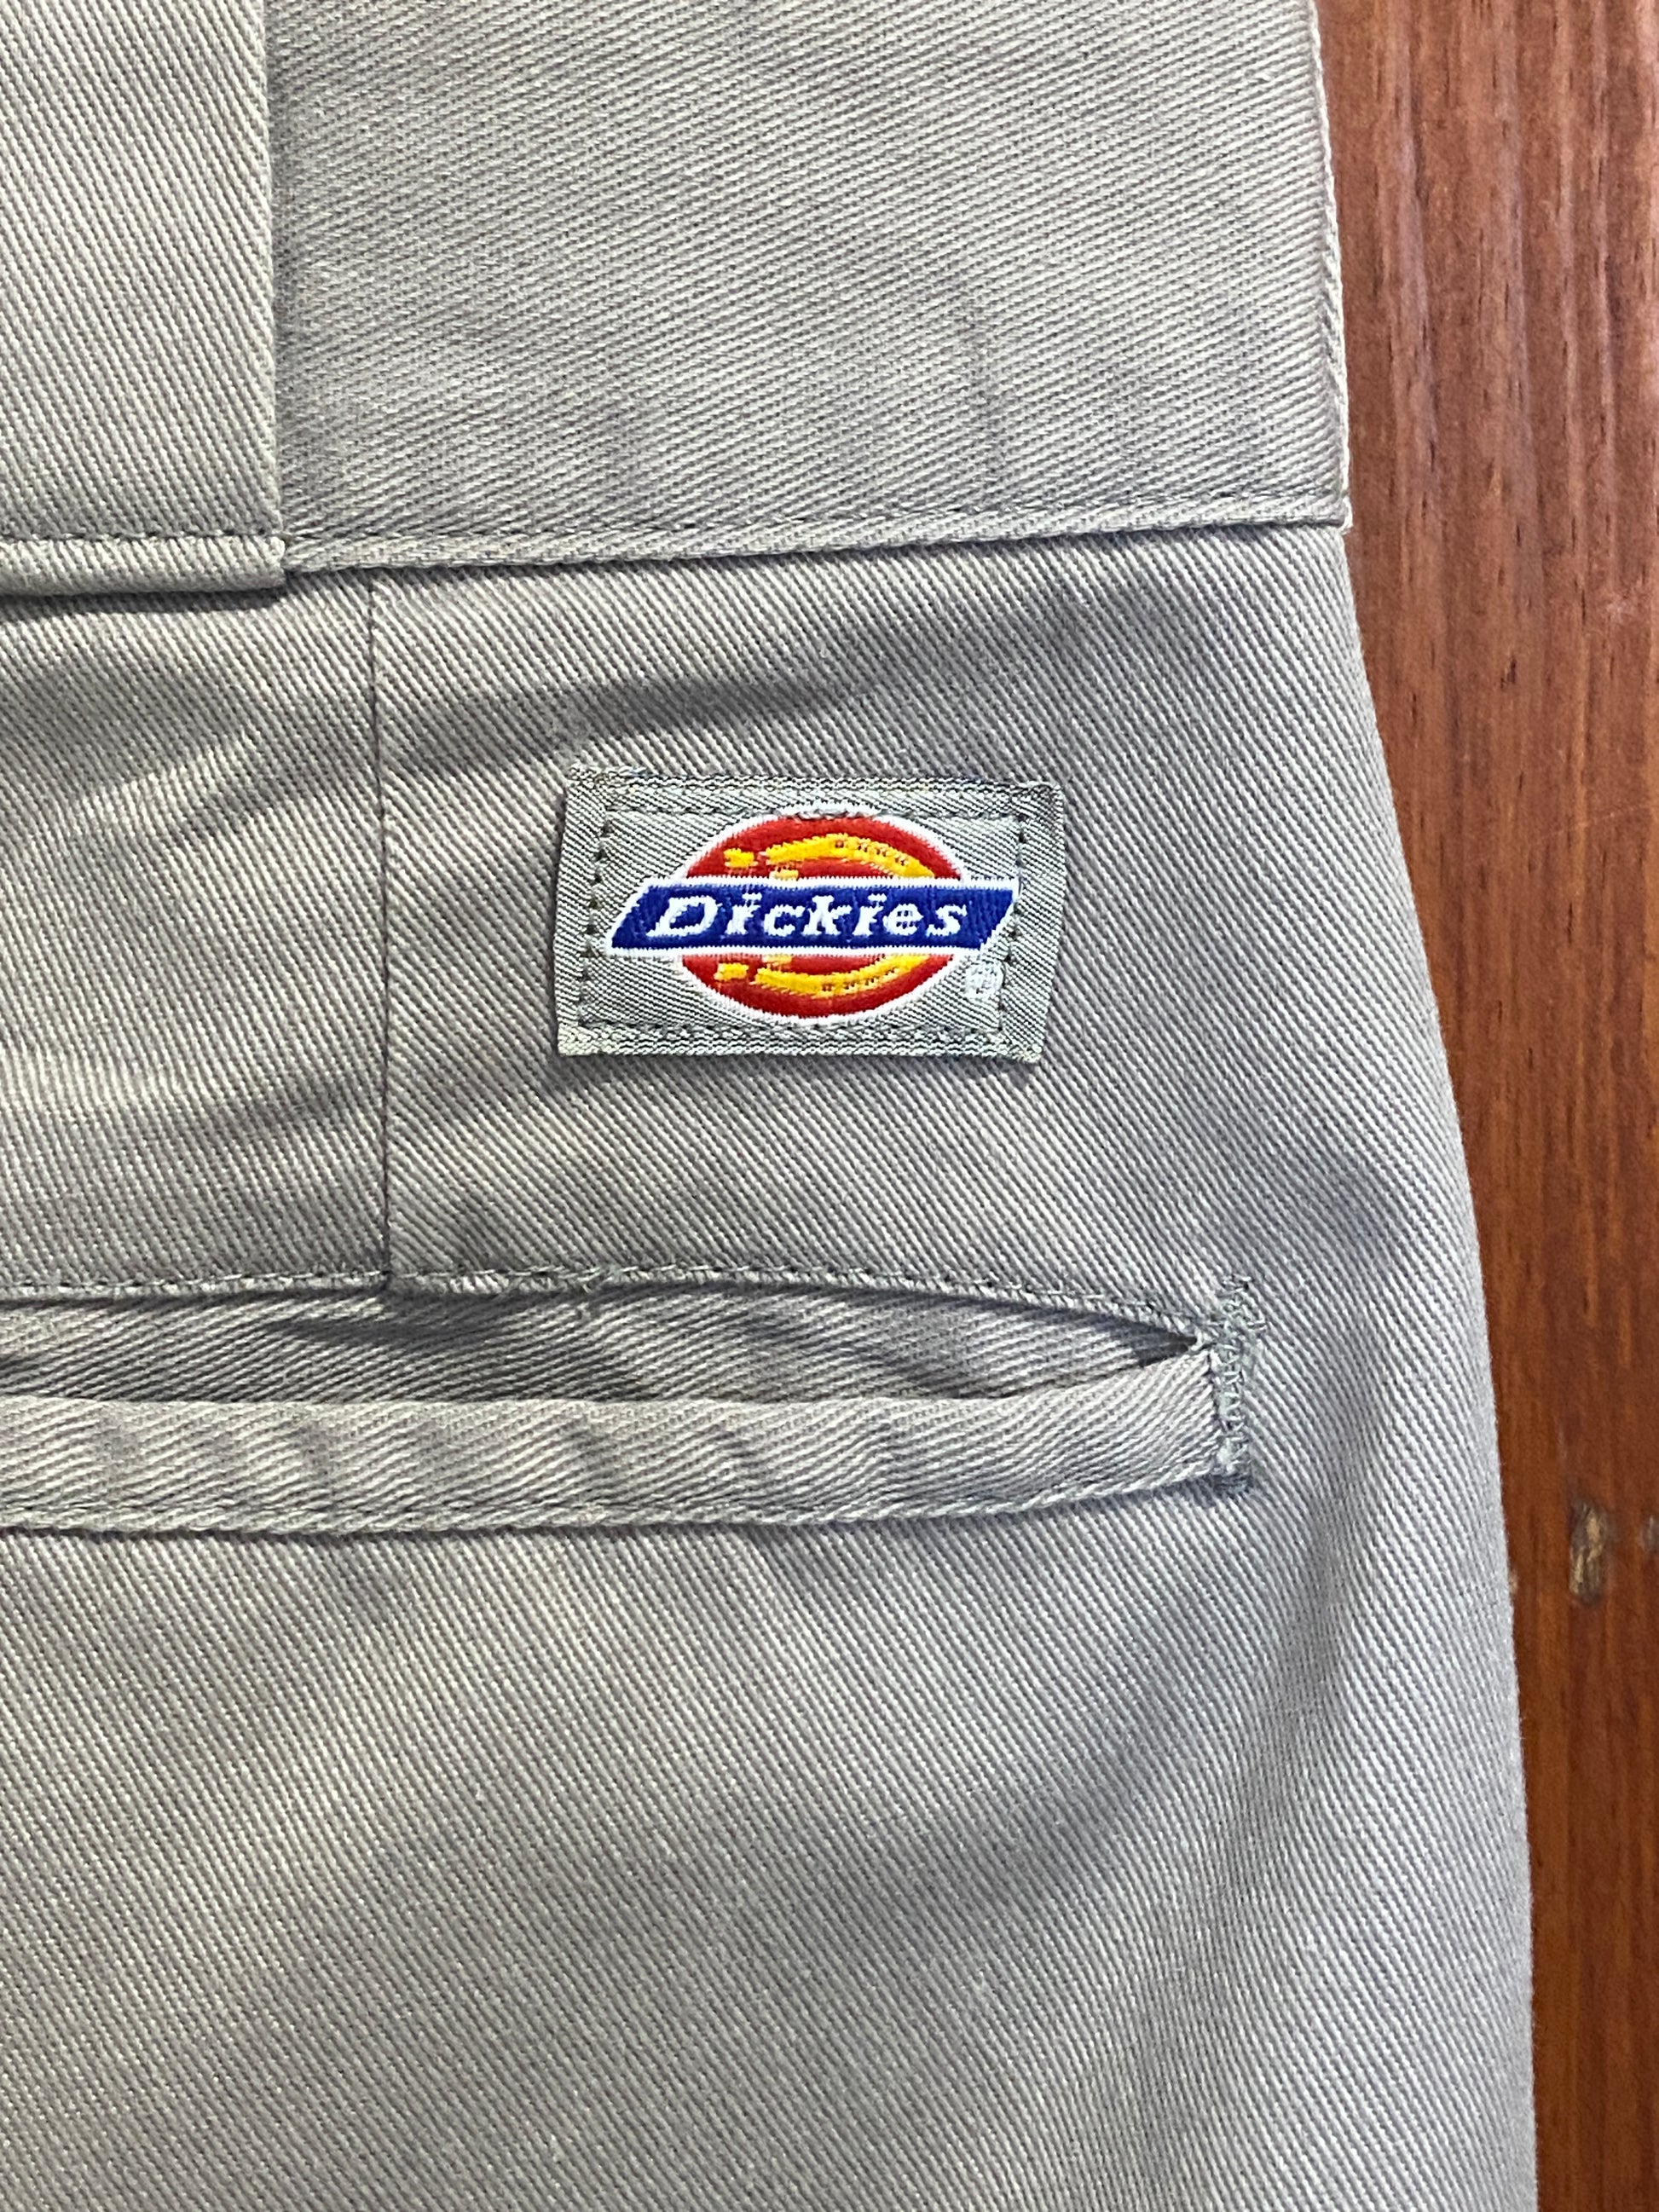 Grey Vintage Dickies Pants Model 874 Size 34X32: Classic Workwear Apparel